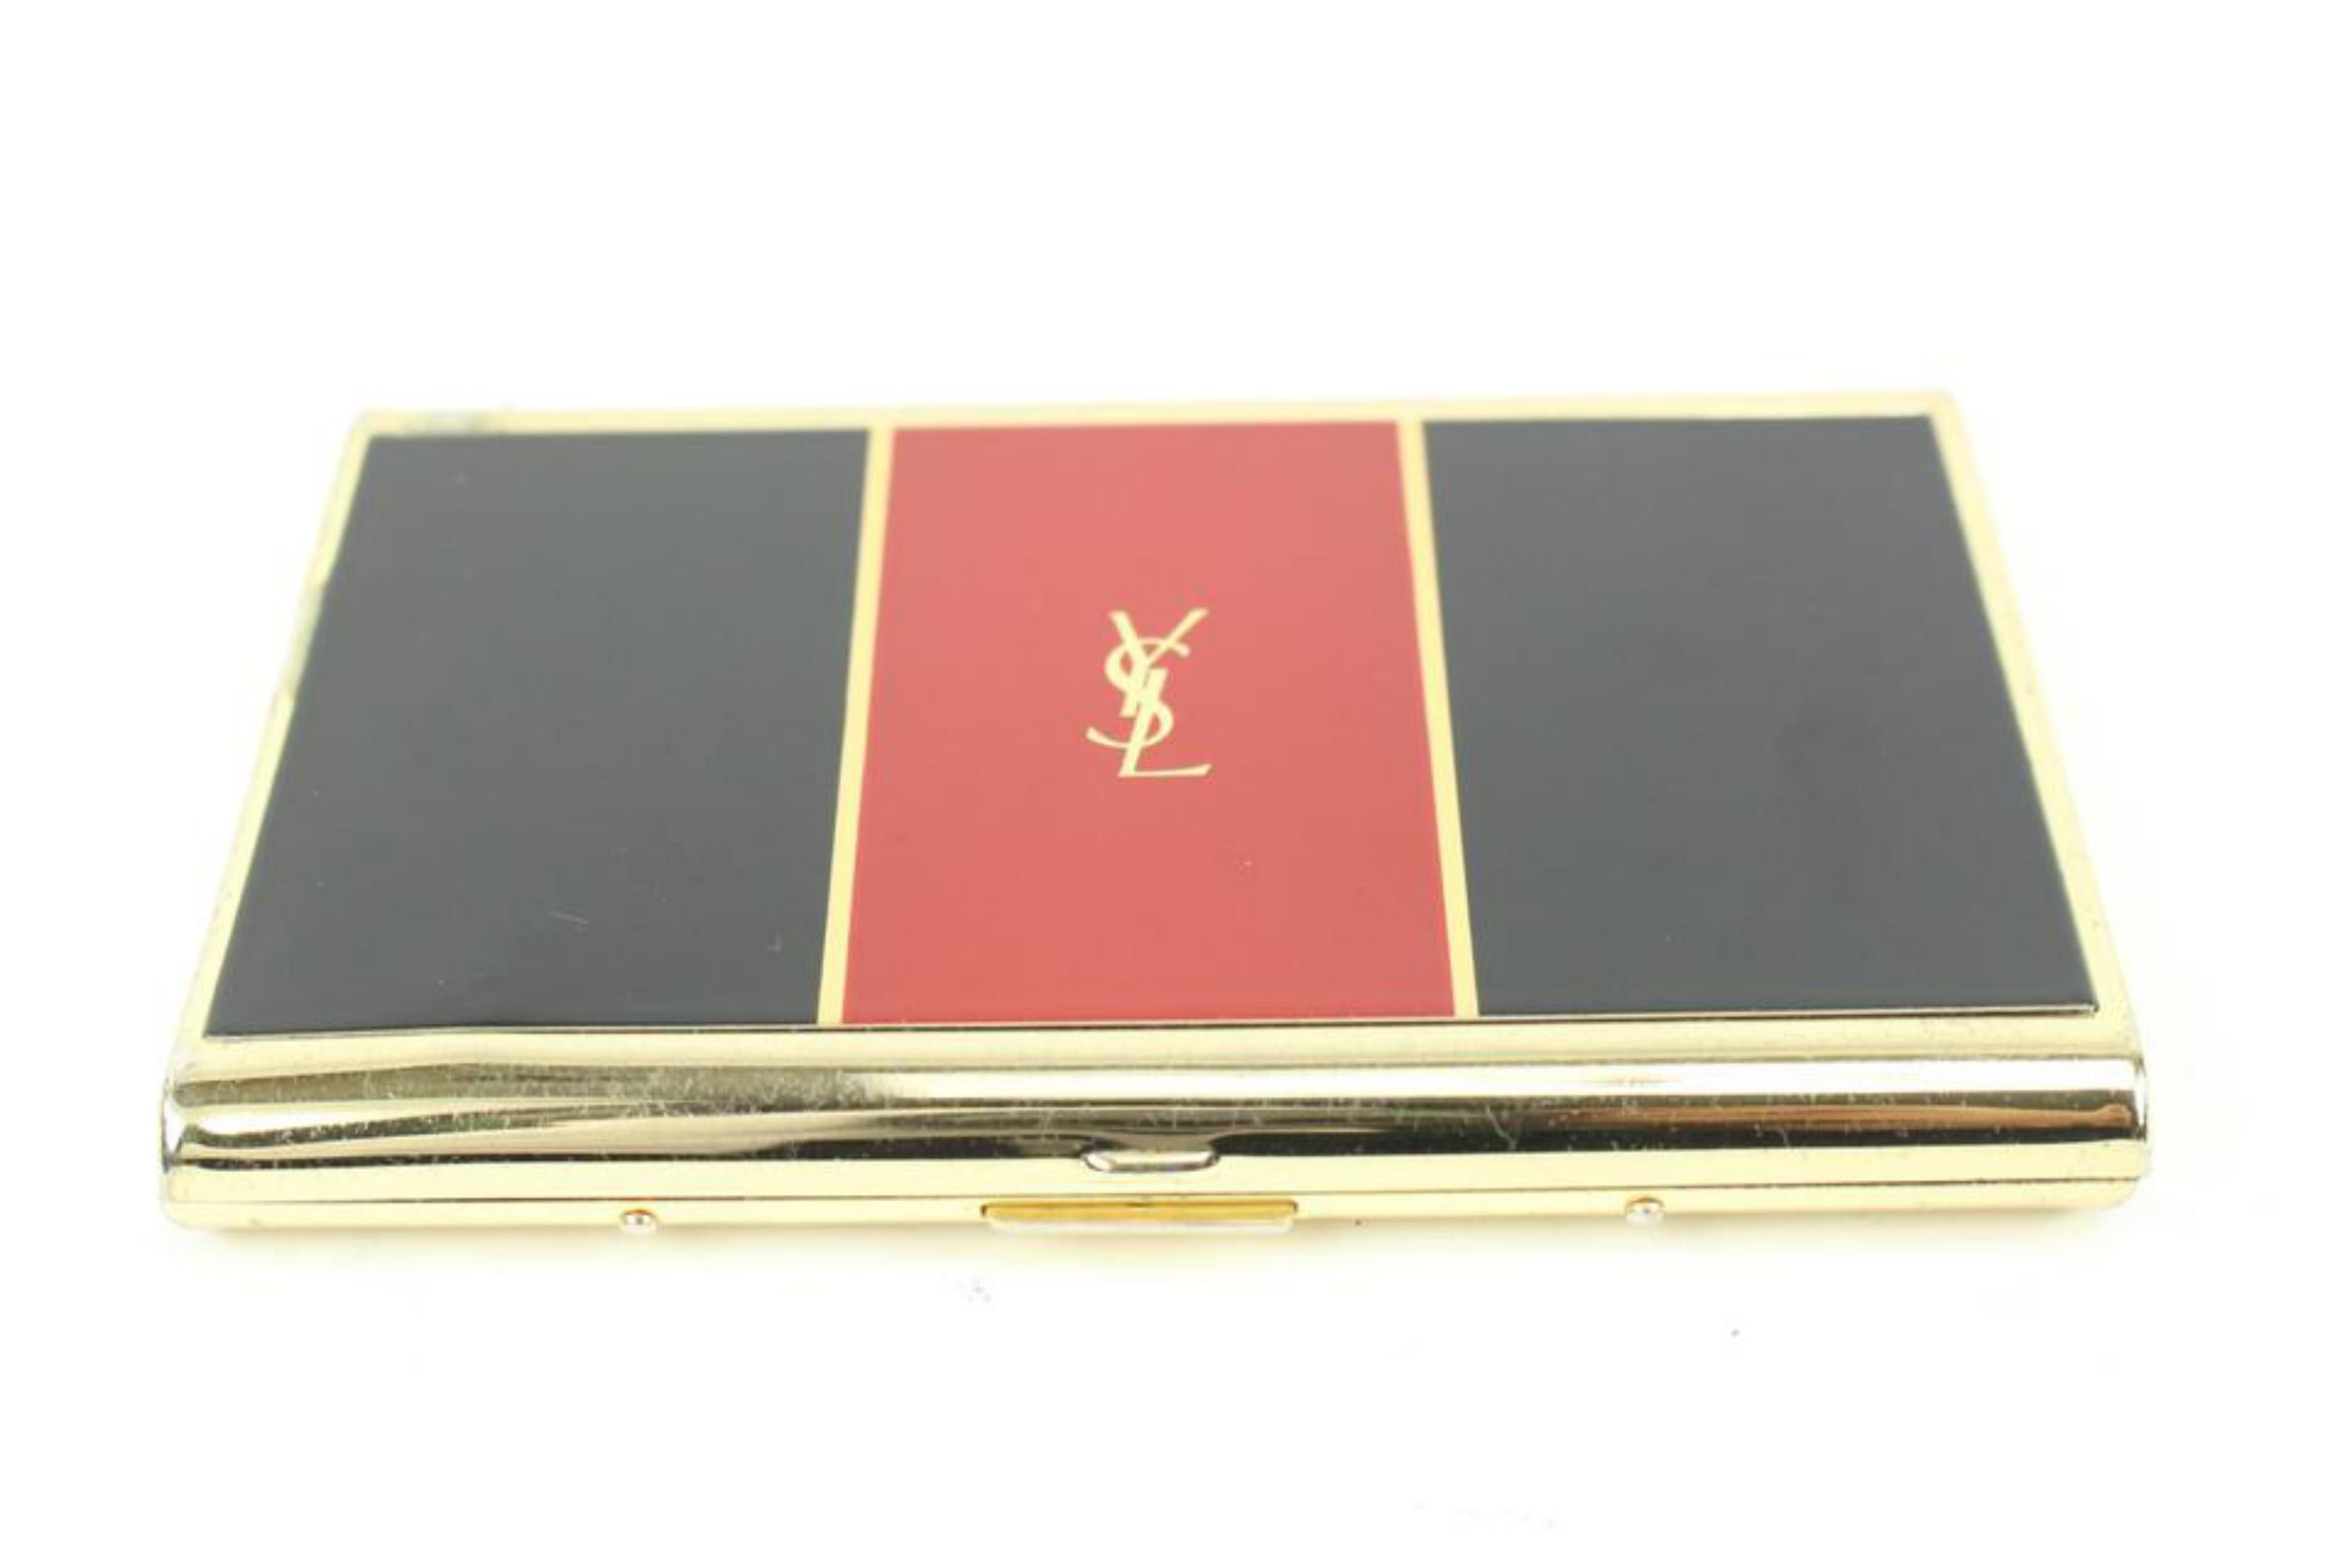 Saint Laurent Red x Black x Gold YSL Monogramme Card Case Cigarette Box  21ysl42 2